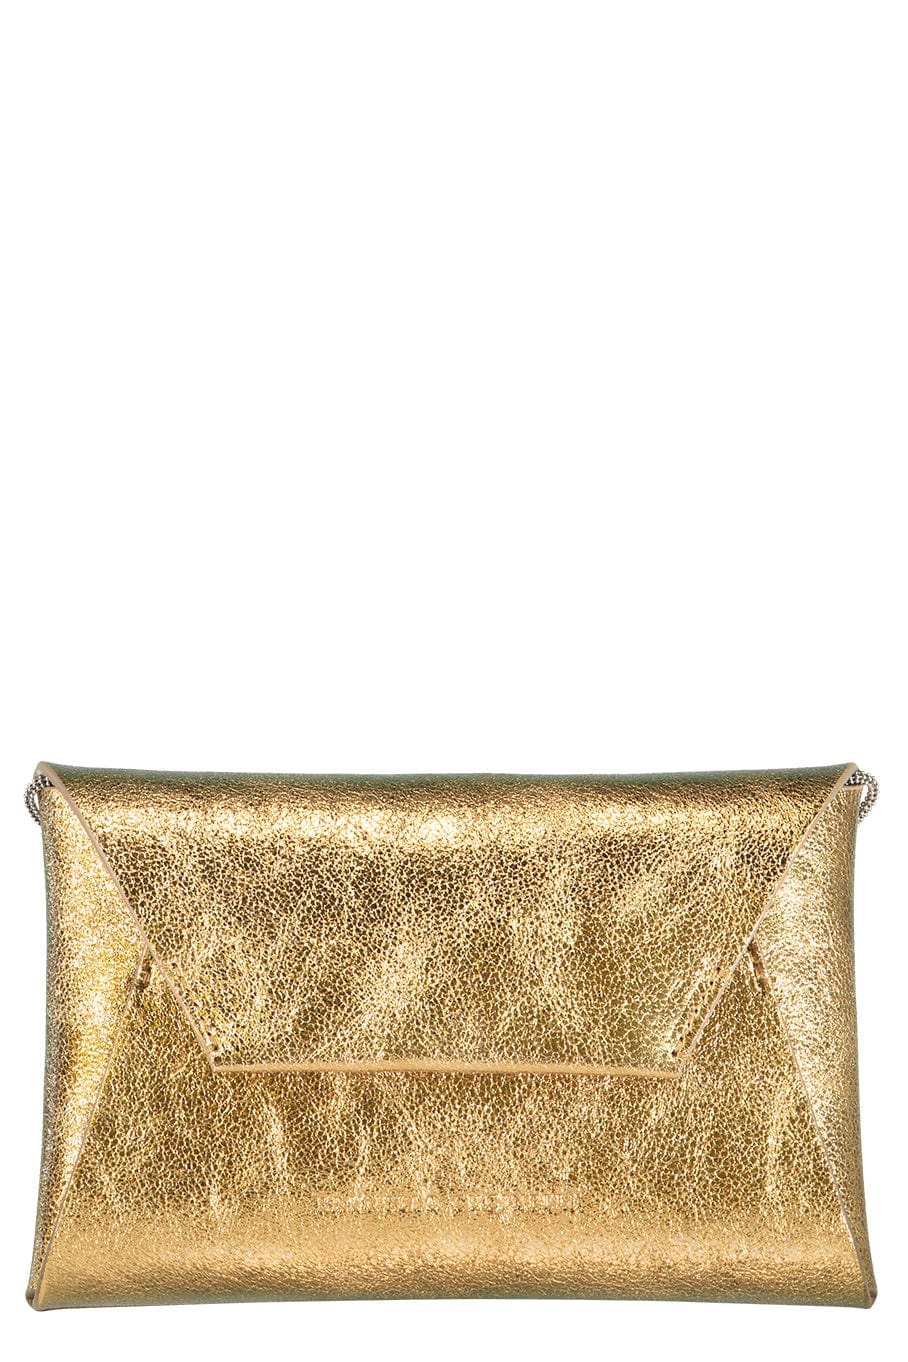 BRUNELLO CUCINELLI-Textured Metallic Envelop Bag-ORO SCURO